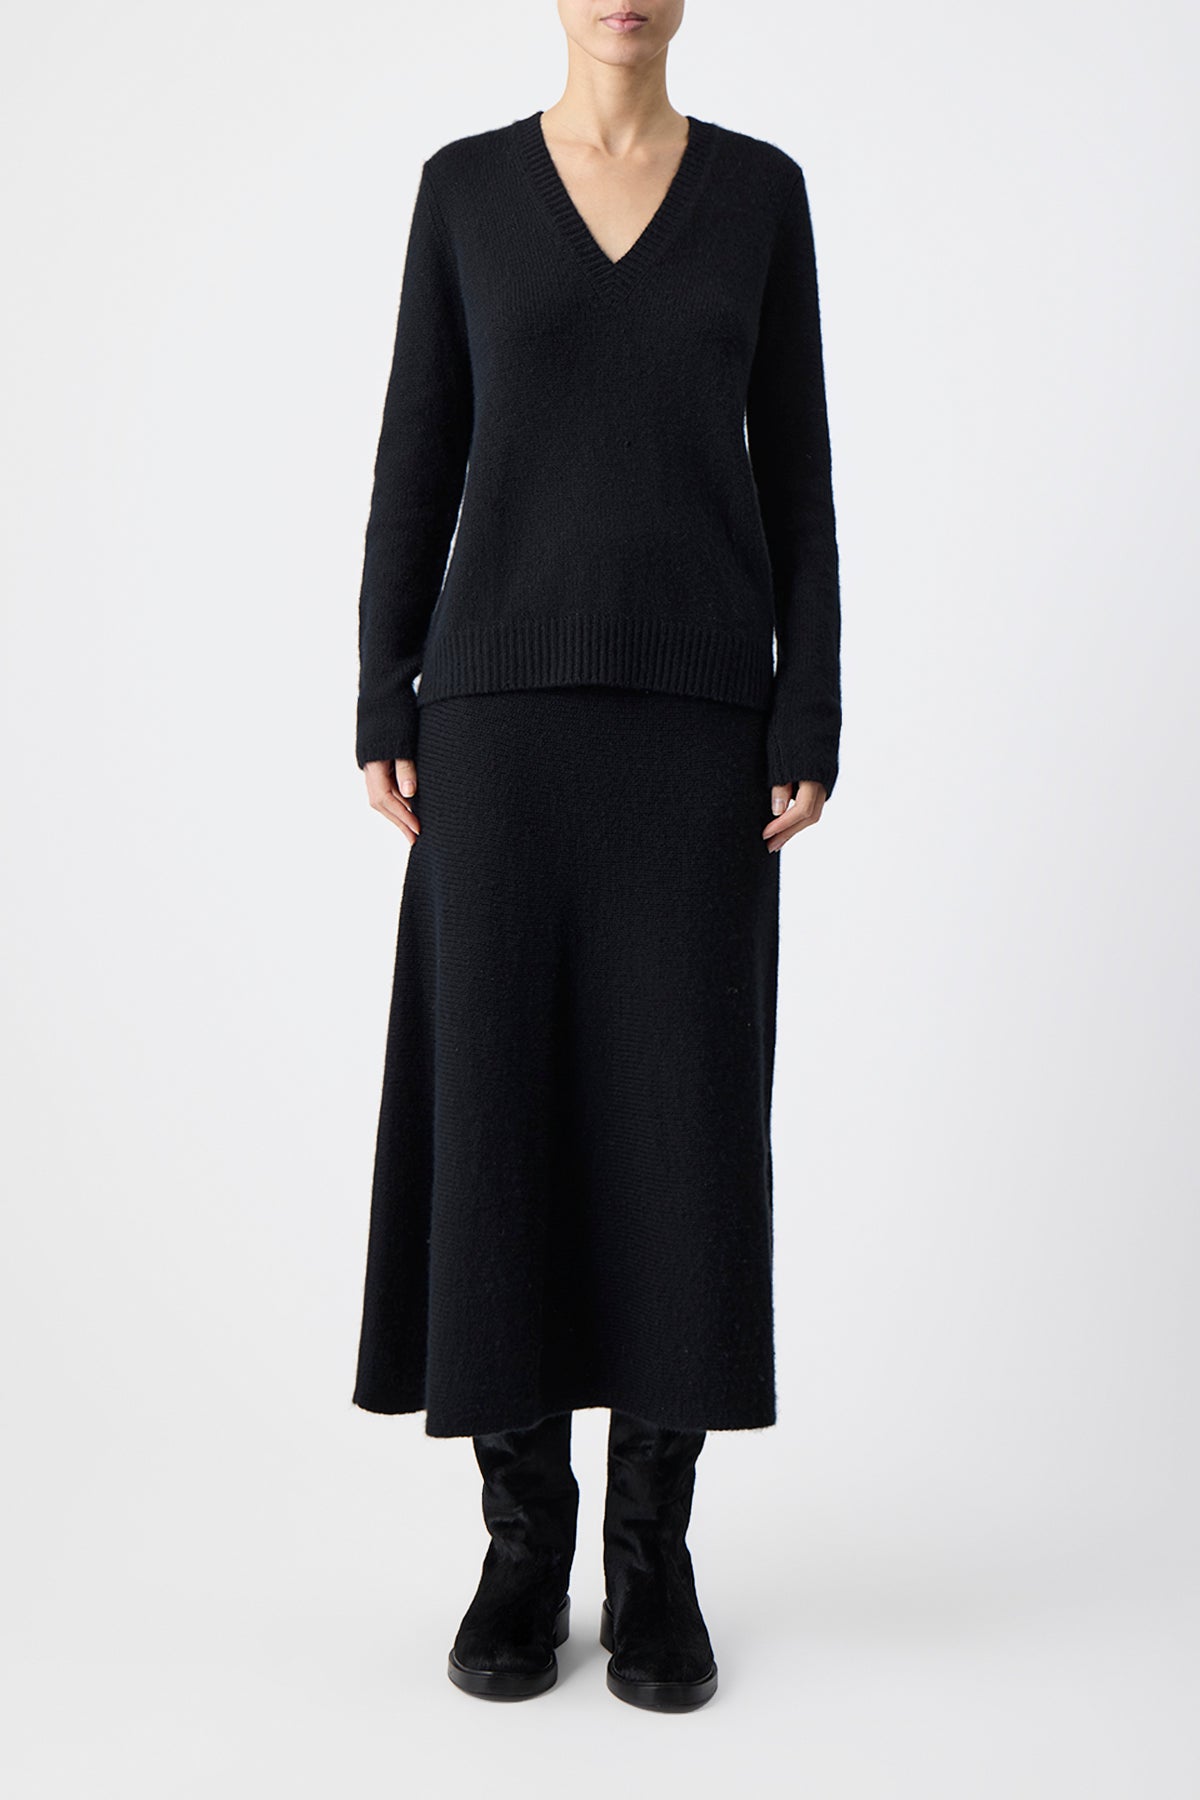 Manni Knit Skirt in Black Cashmere